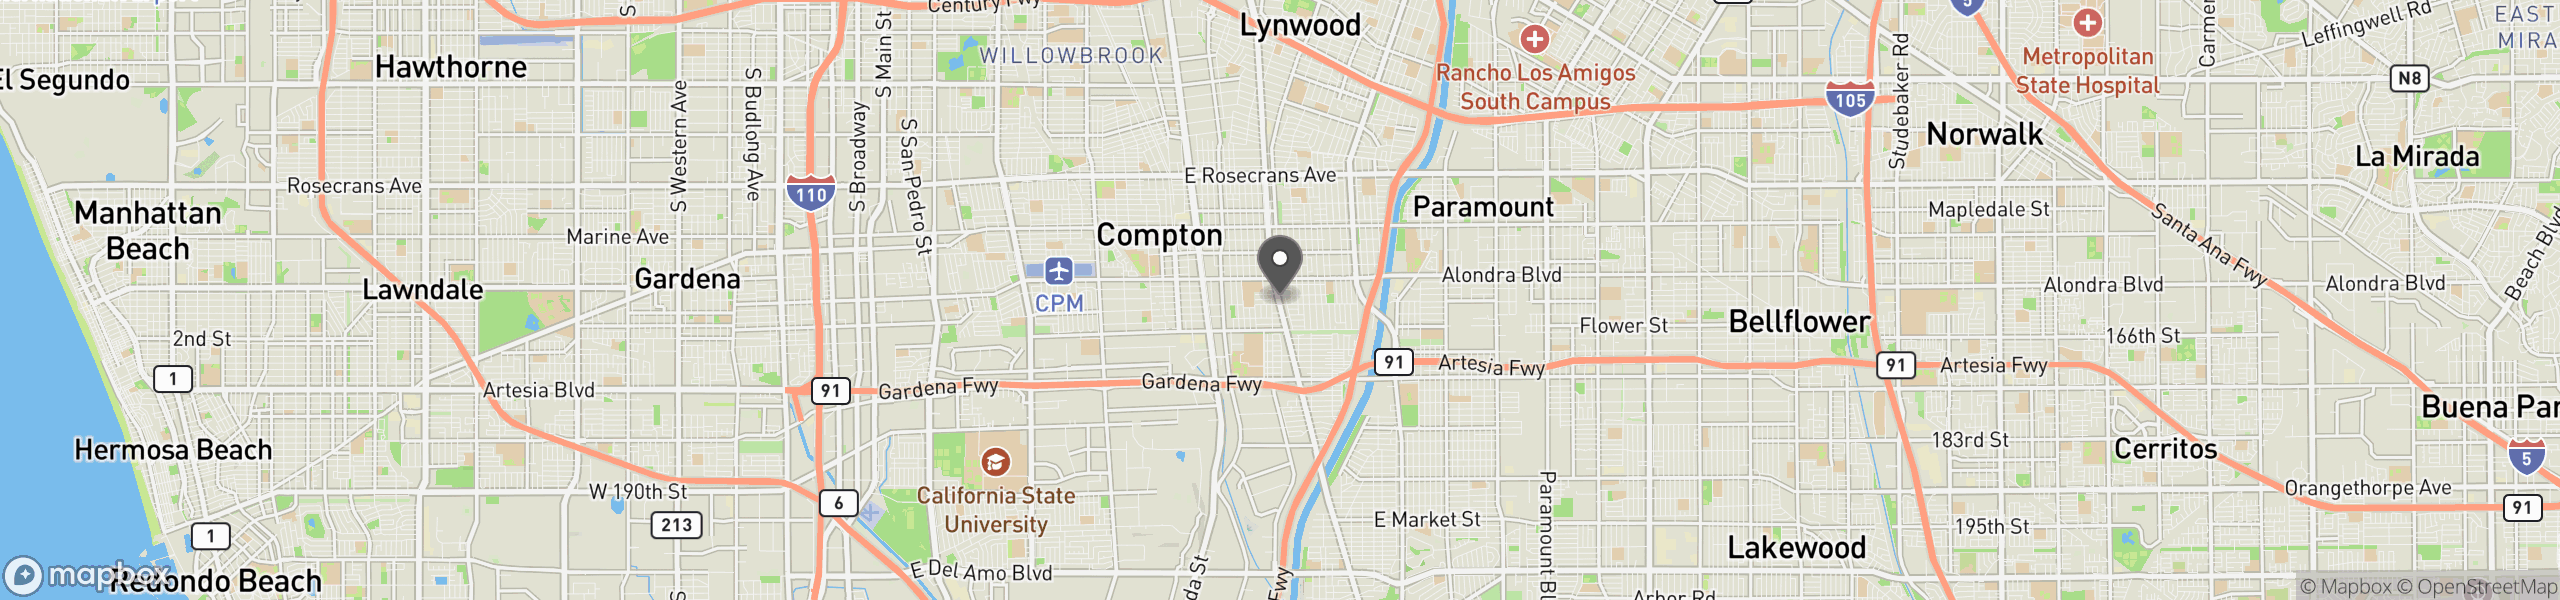 Compton, CA 90221